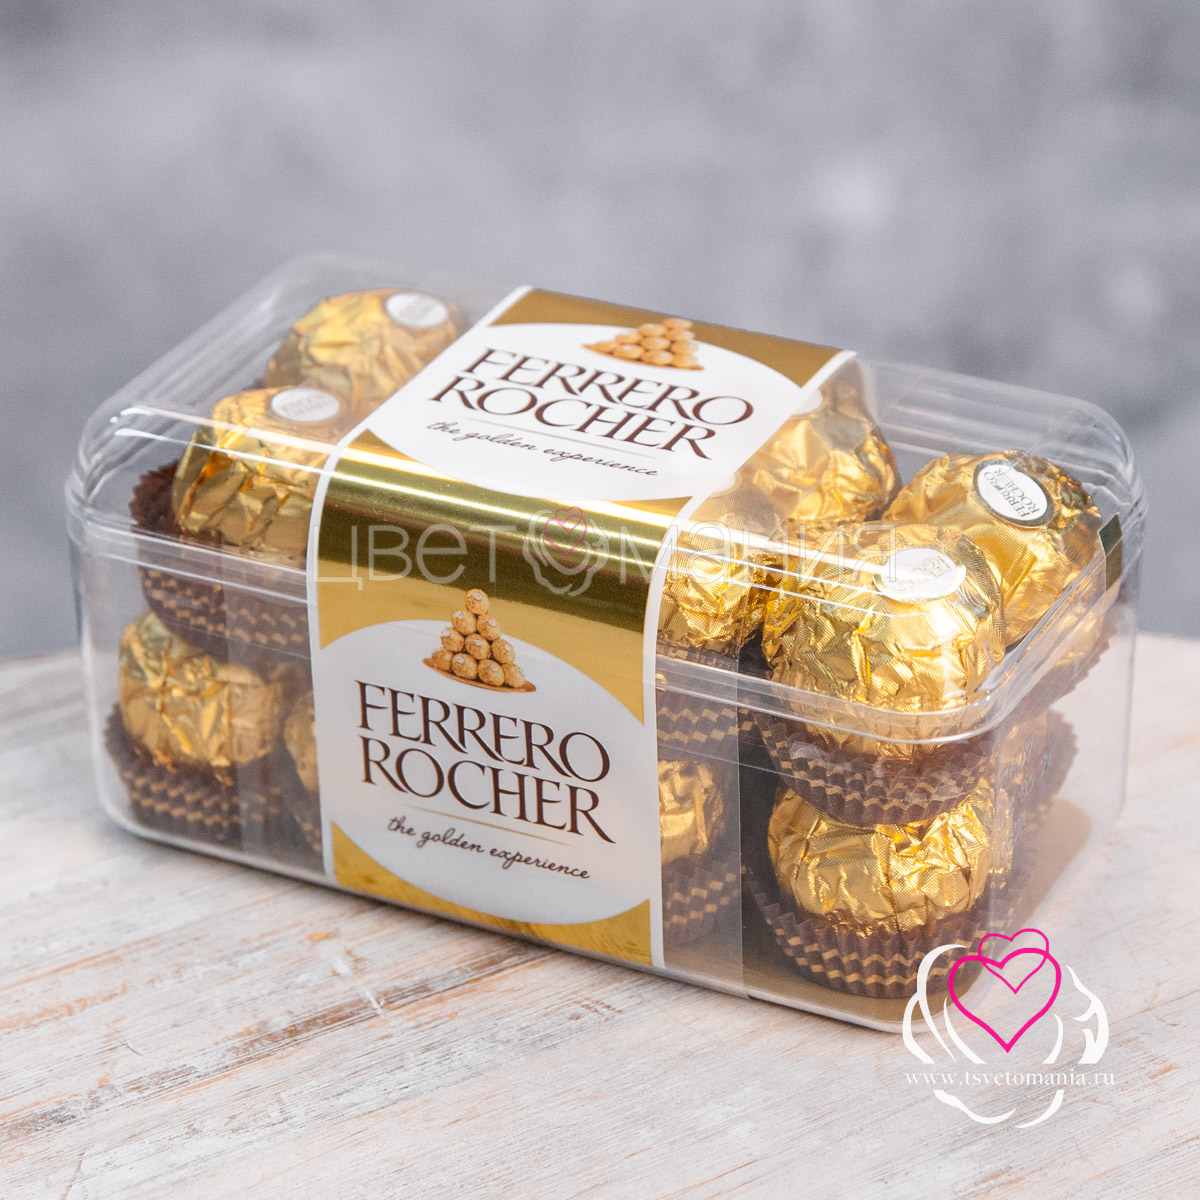 Ferrero rocher конфеты 200 г конфеты ferrero rocher 200г т 16